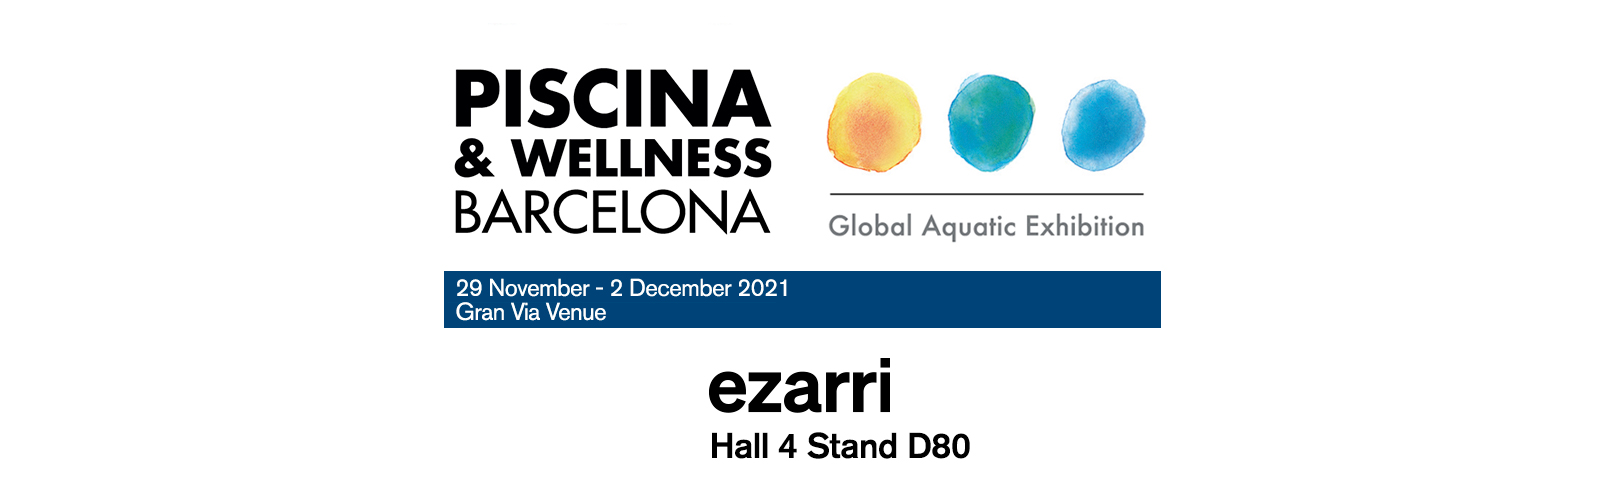 Visit us at Piscina & Wellness Barcelona